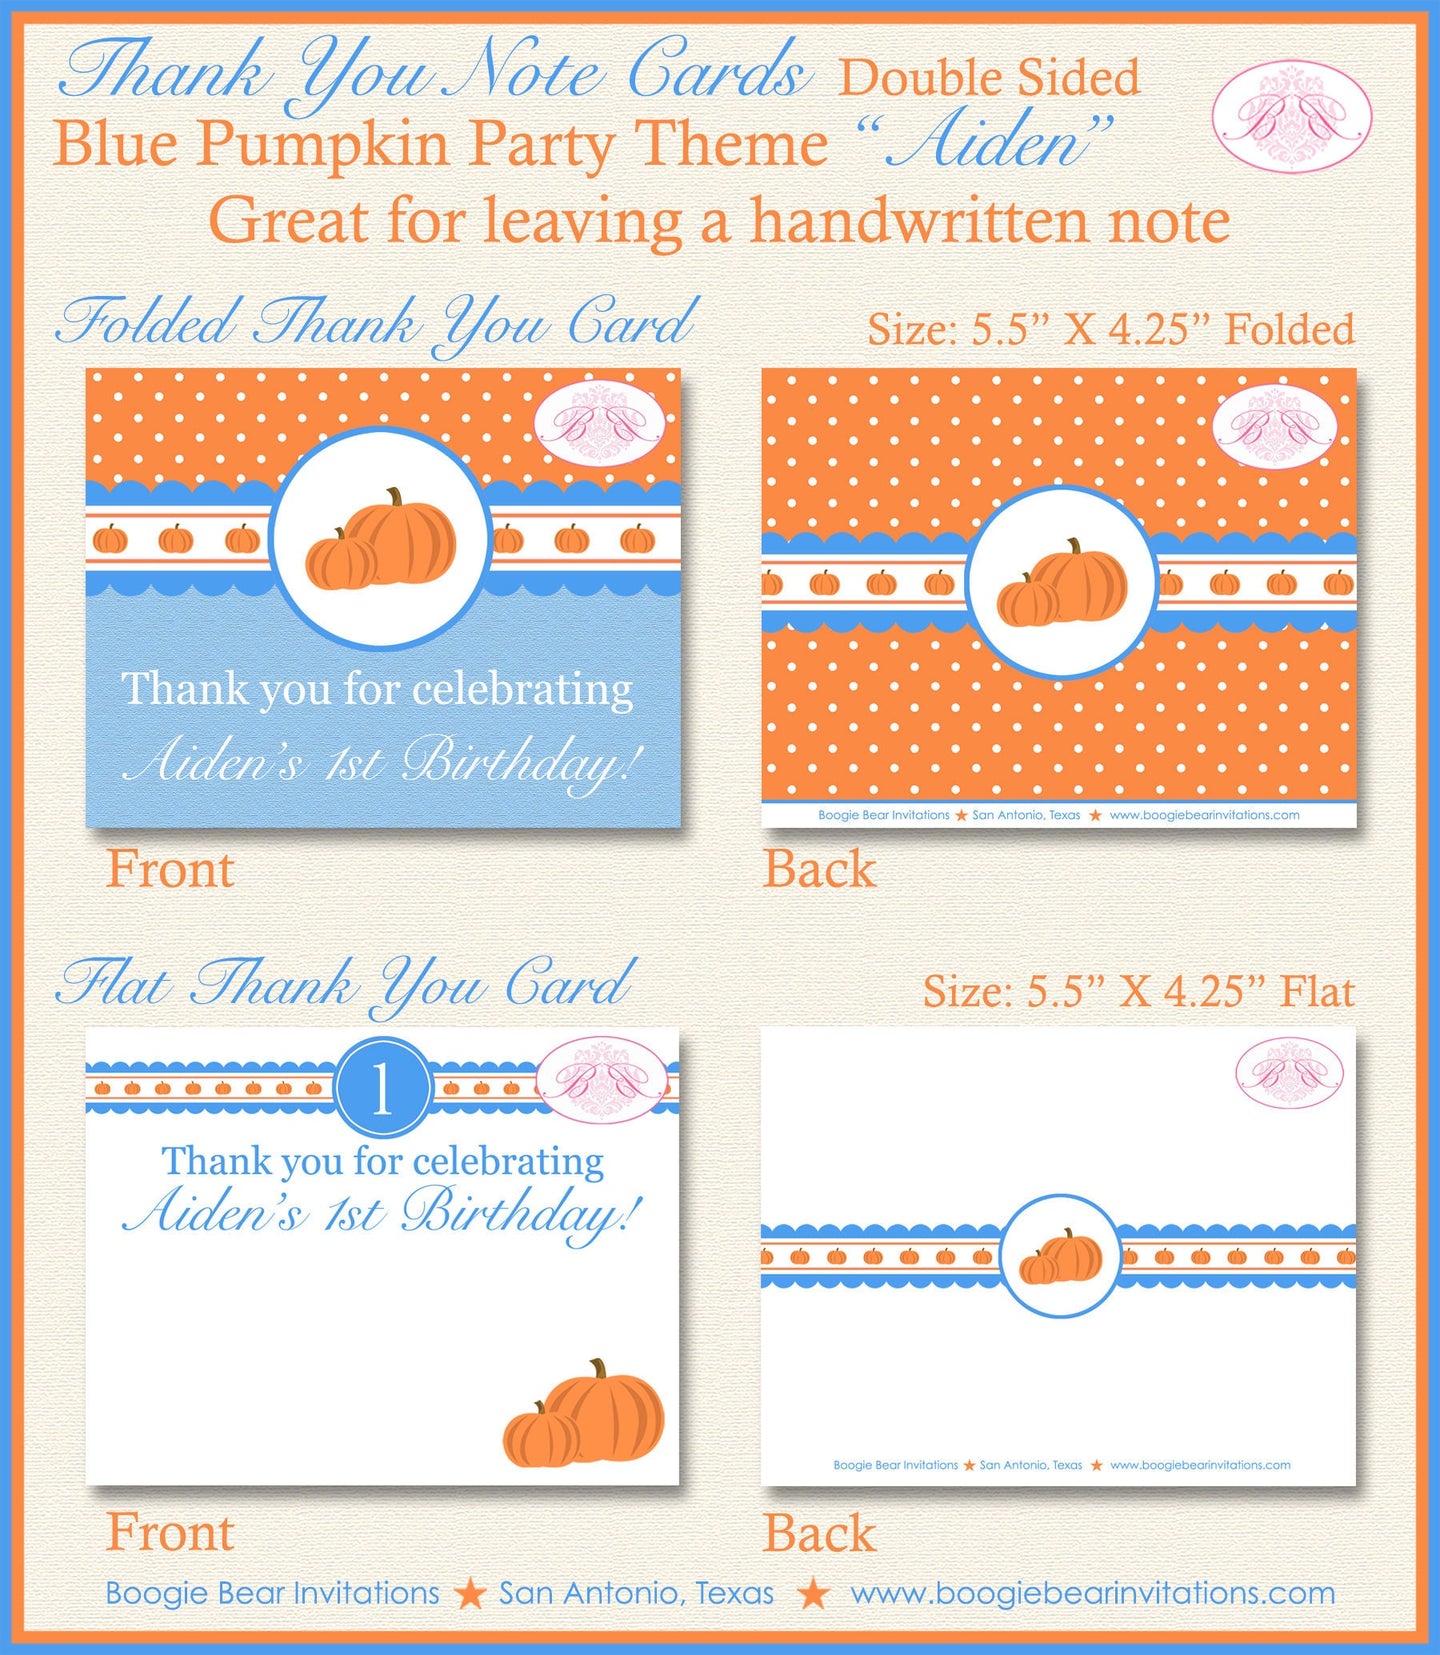 Blue Pumpkin Party Thank You Card Note Birthday Boy Autumn Harvest Orange Fall Farm Ranch 1st Boogie Bear Invitations Aiden Theme Printed